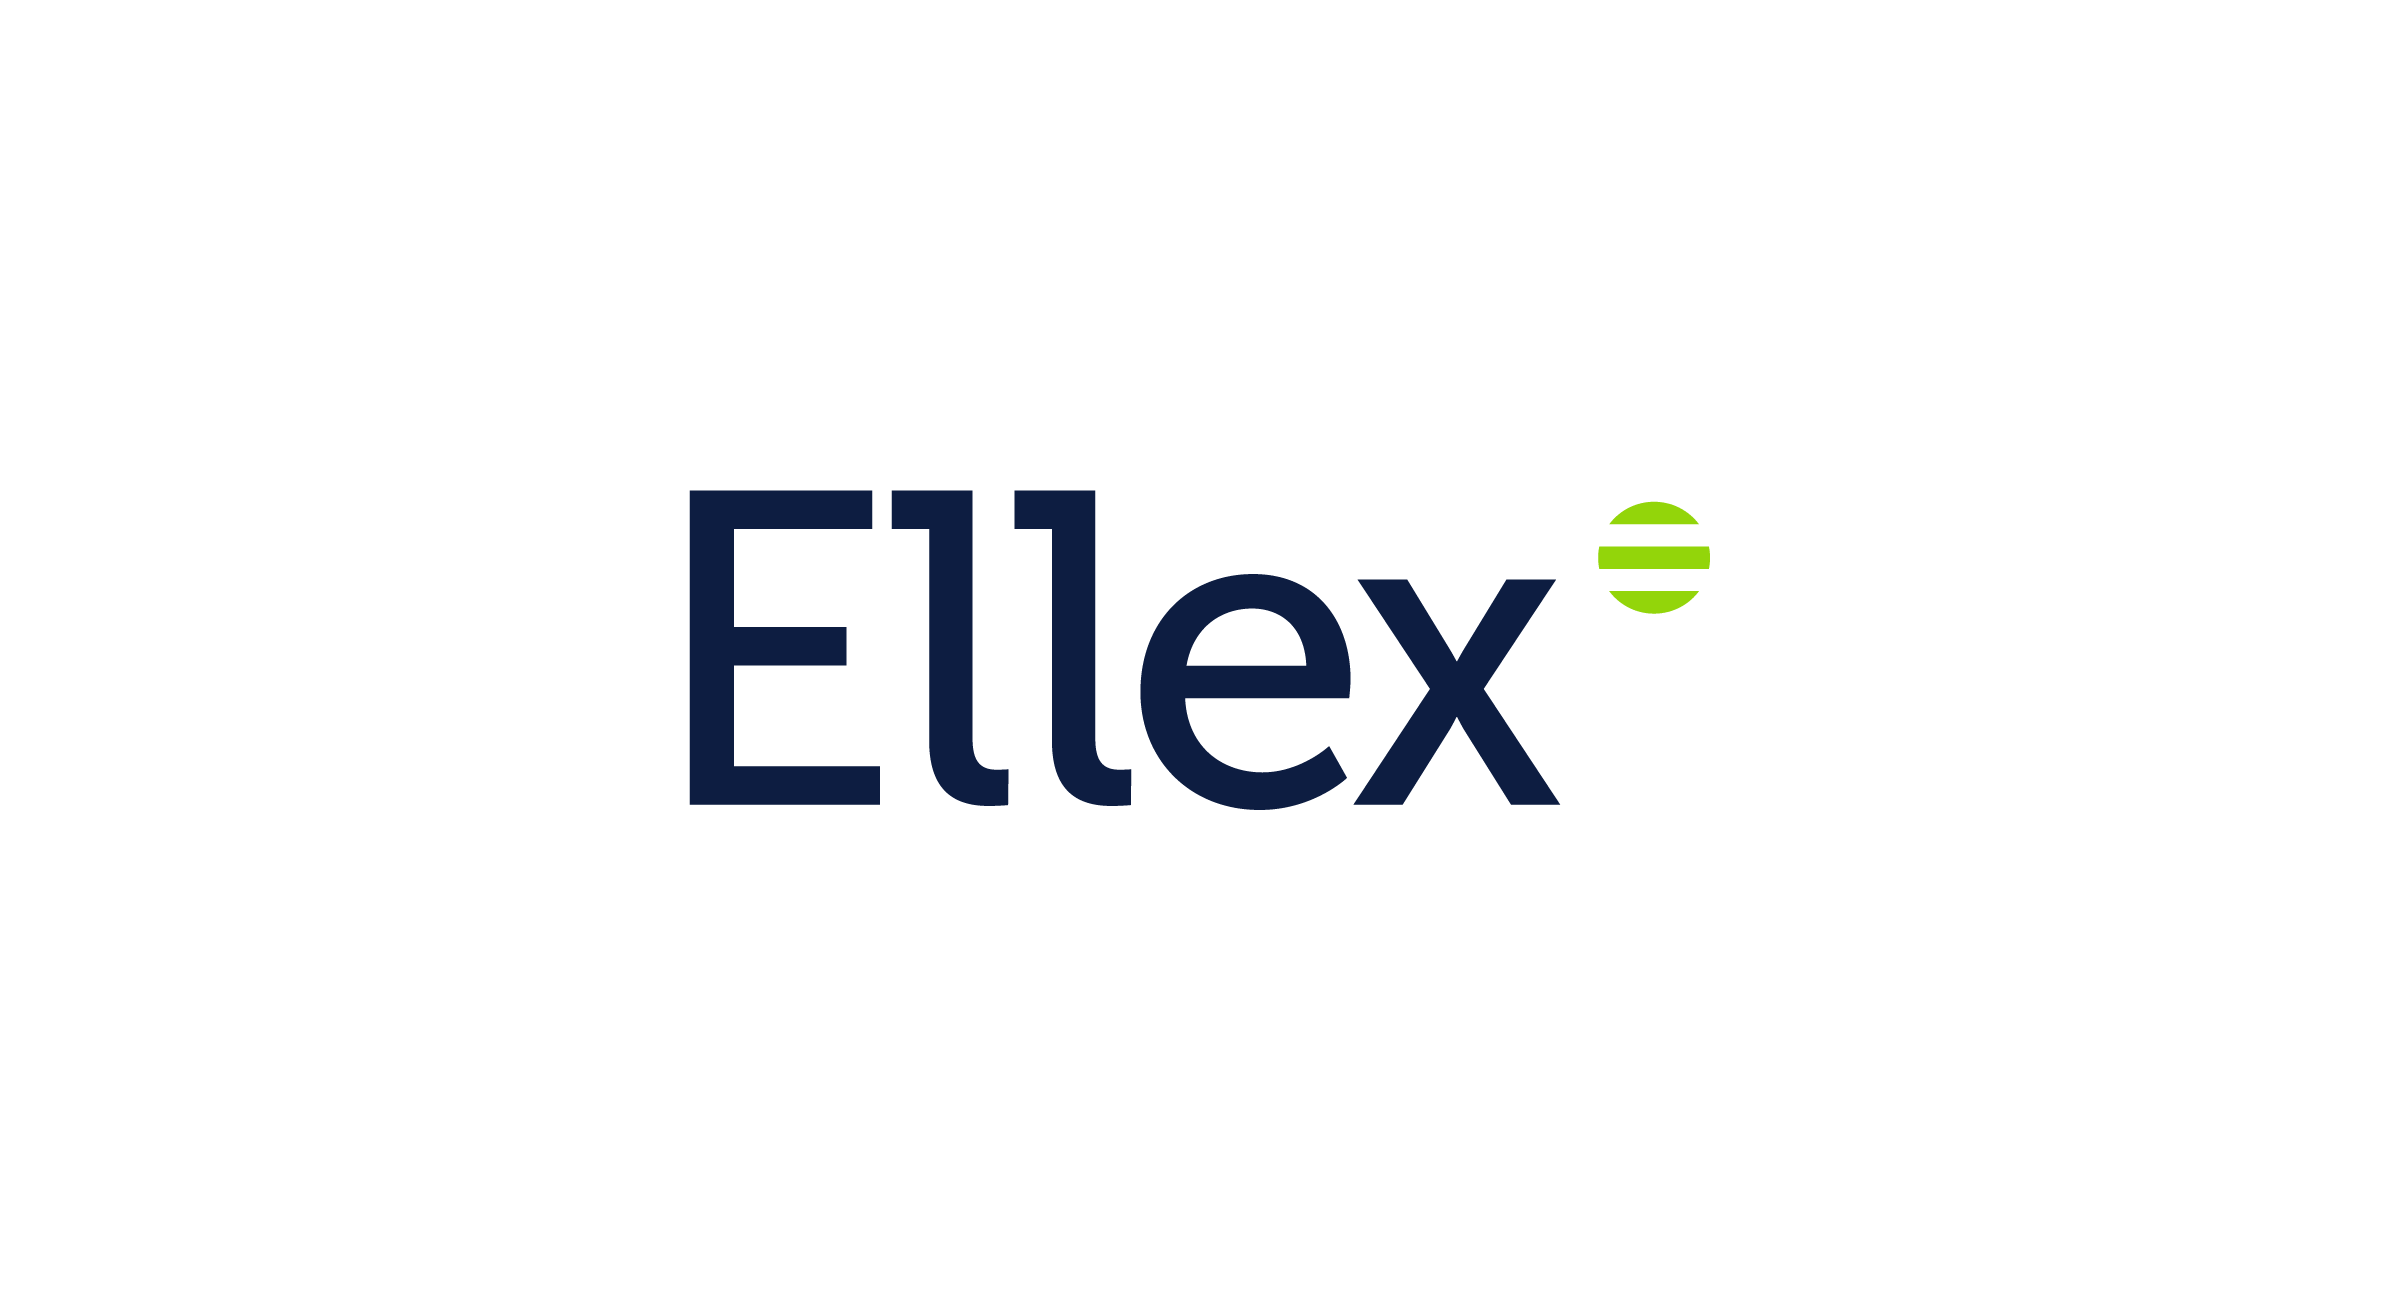 Ellex Logotype Artwork by Peek Creative Limited